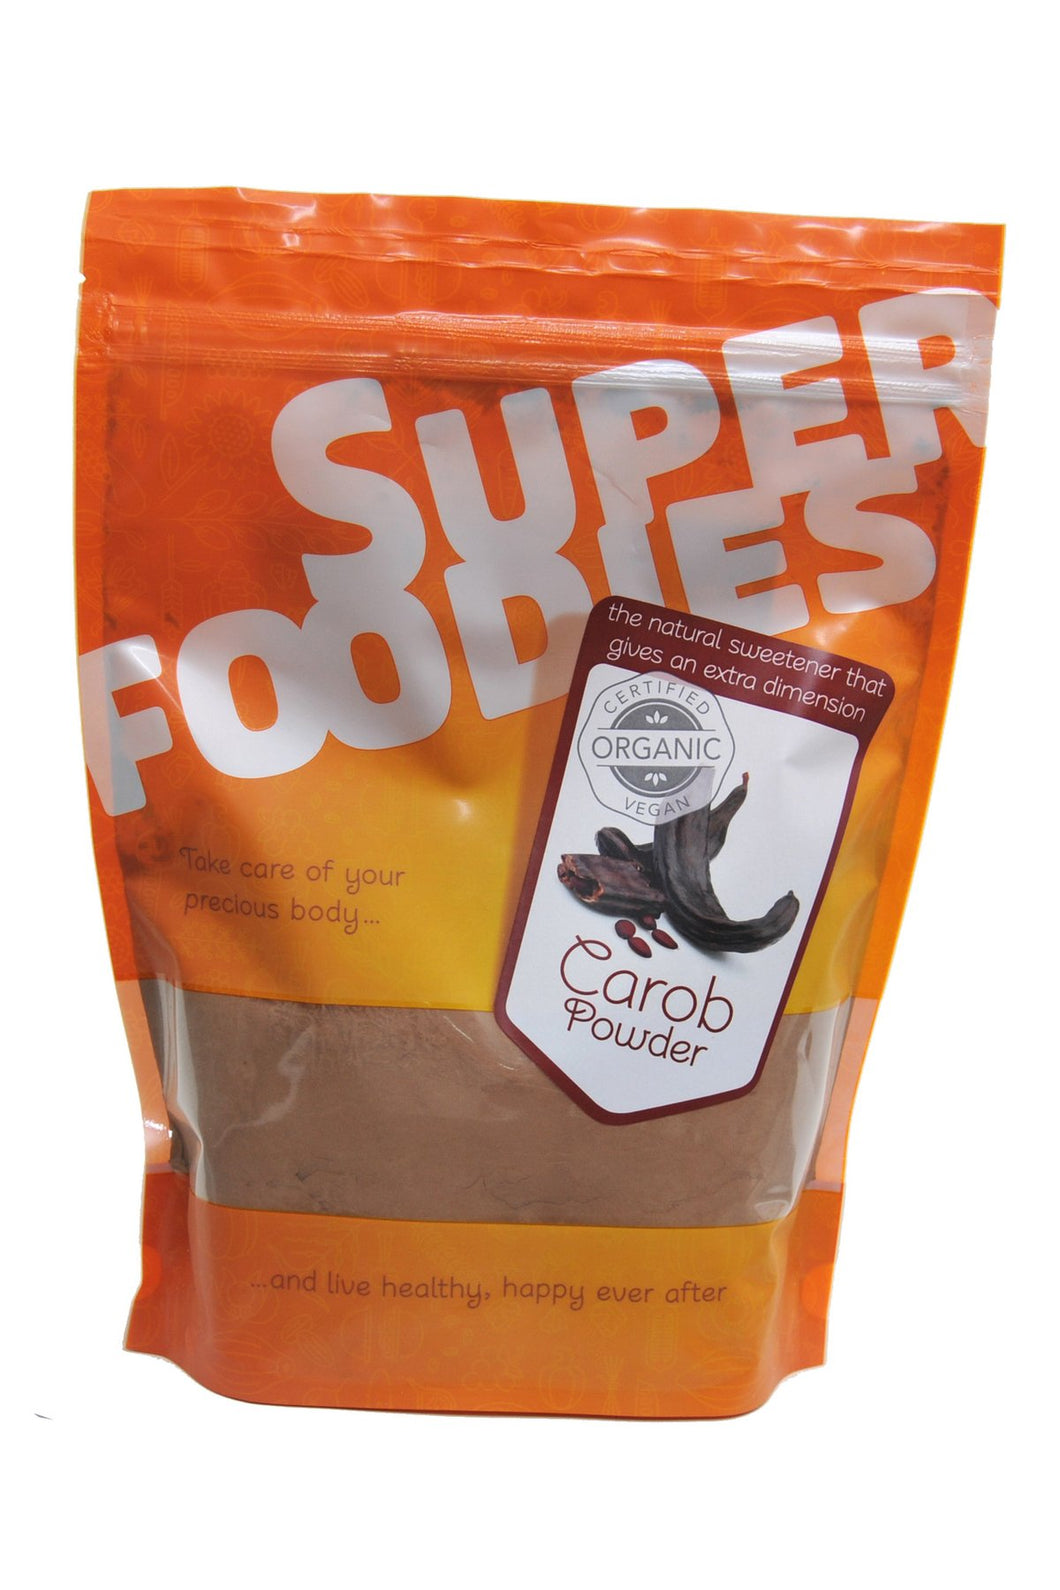 Super Foodies Carob Powder 100g